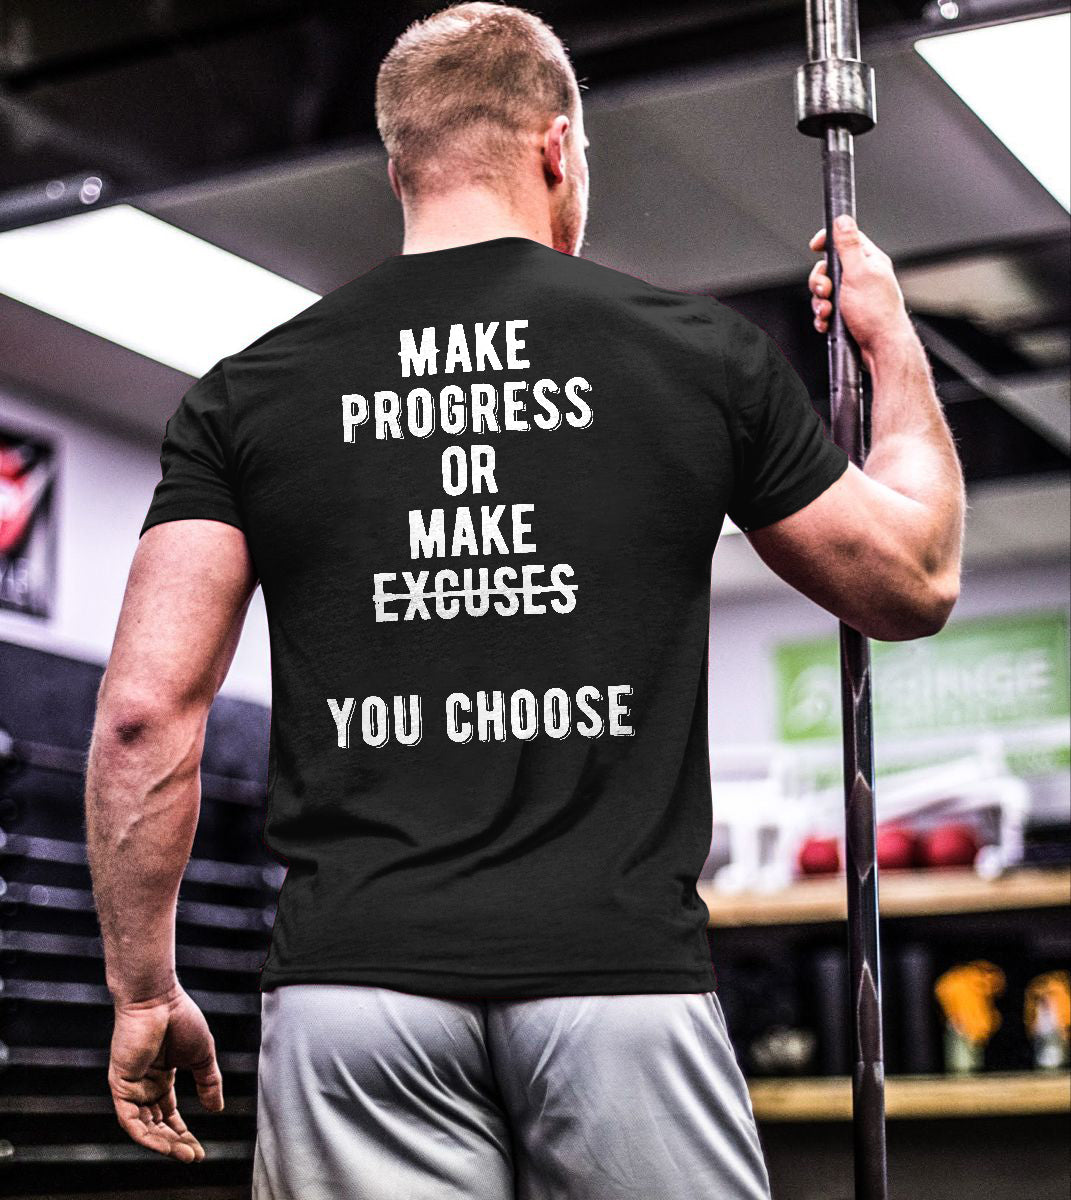 Make Progress Or Make Excuses Printed T-shirt